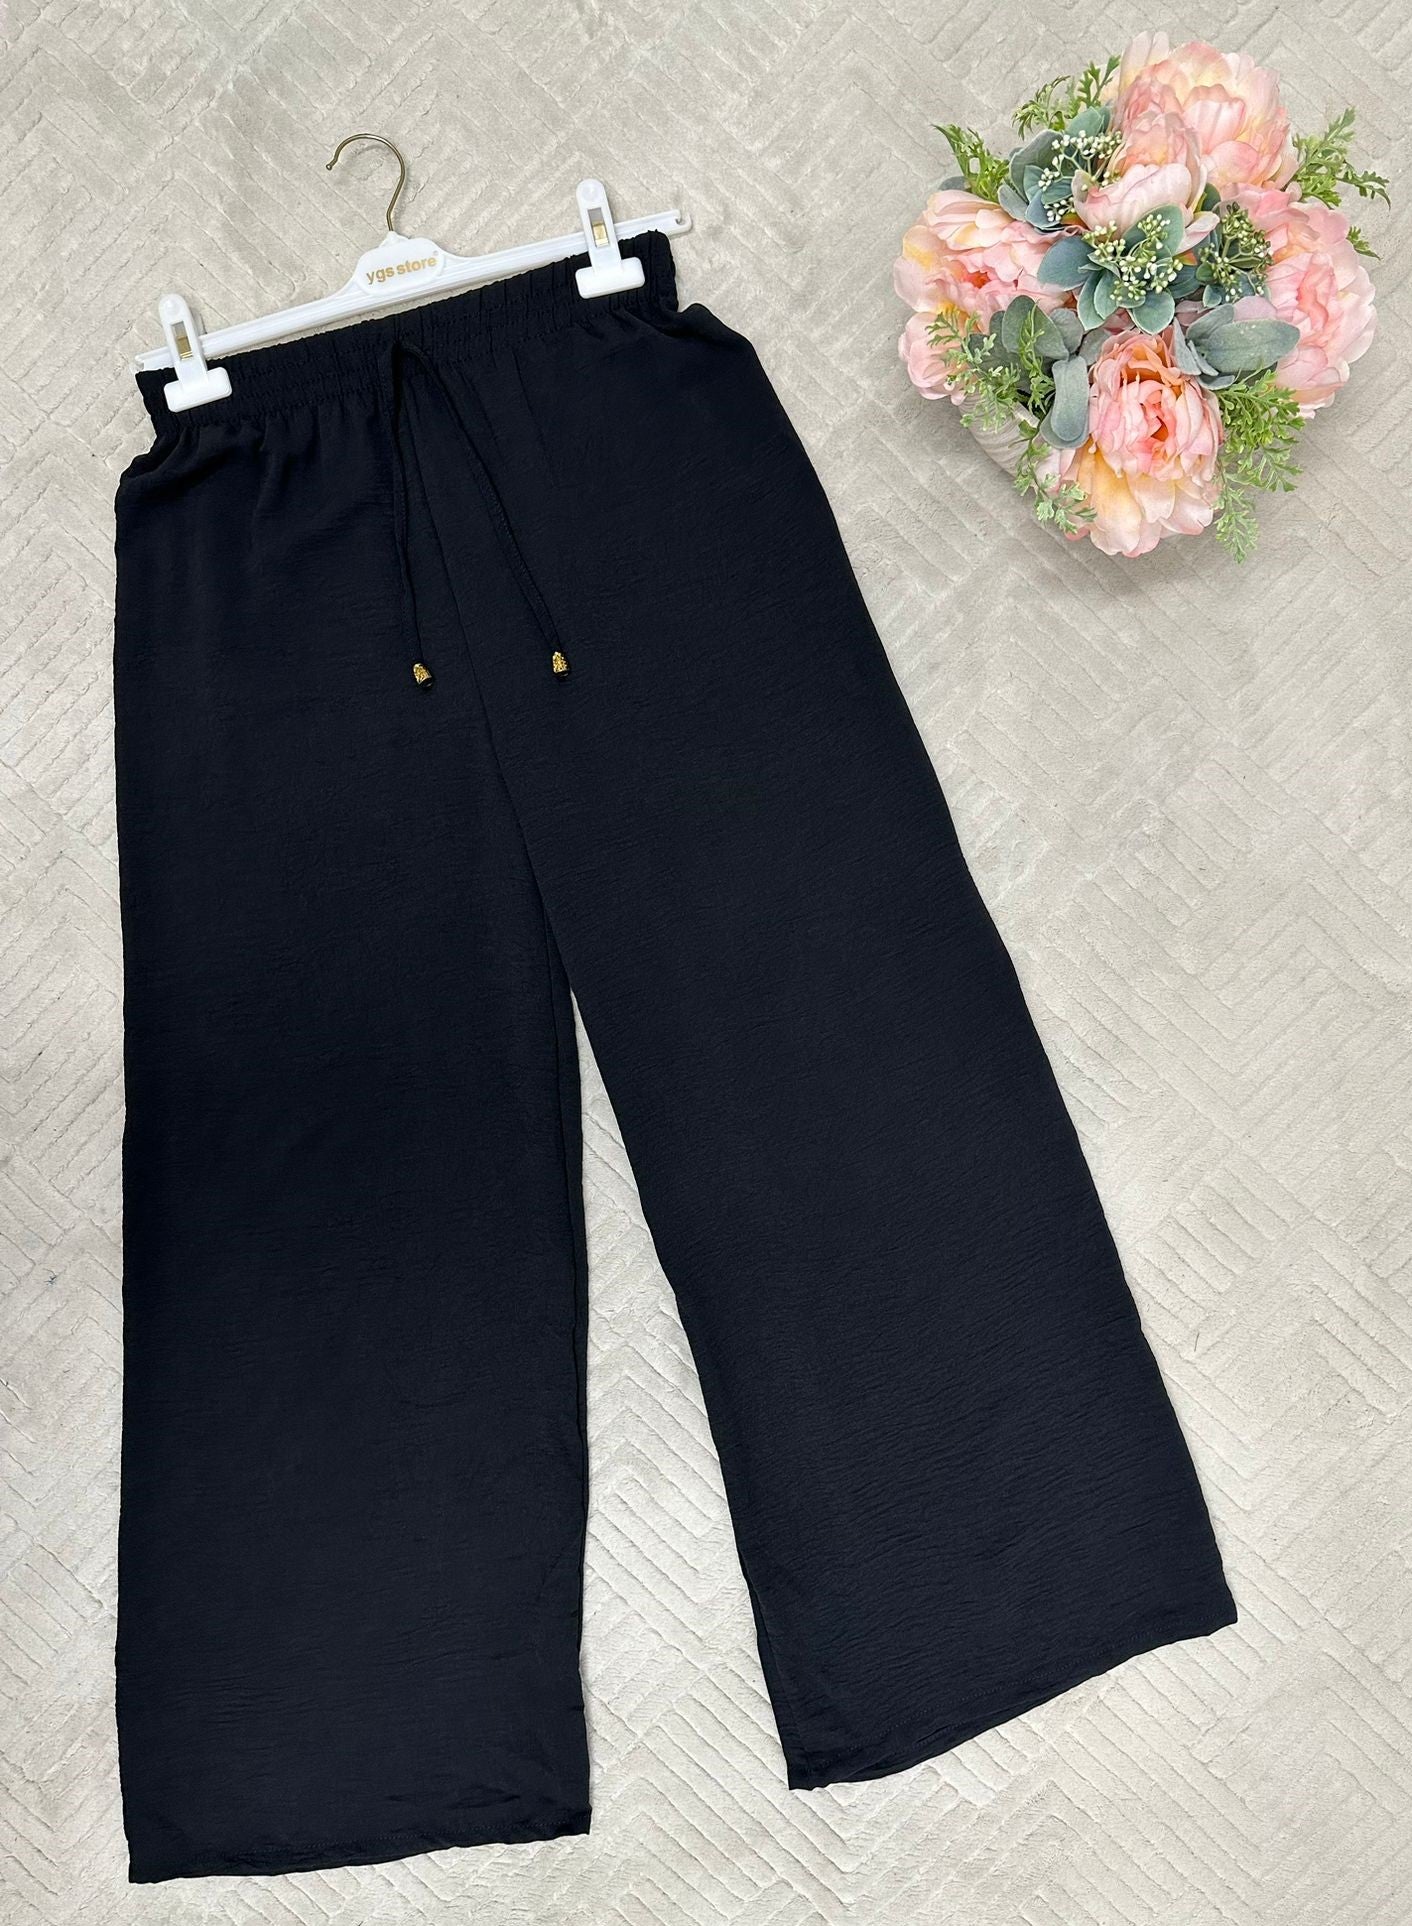 soft material black wide leg pants (length 39.2 inch / 100.7 CM)